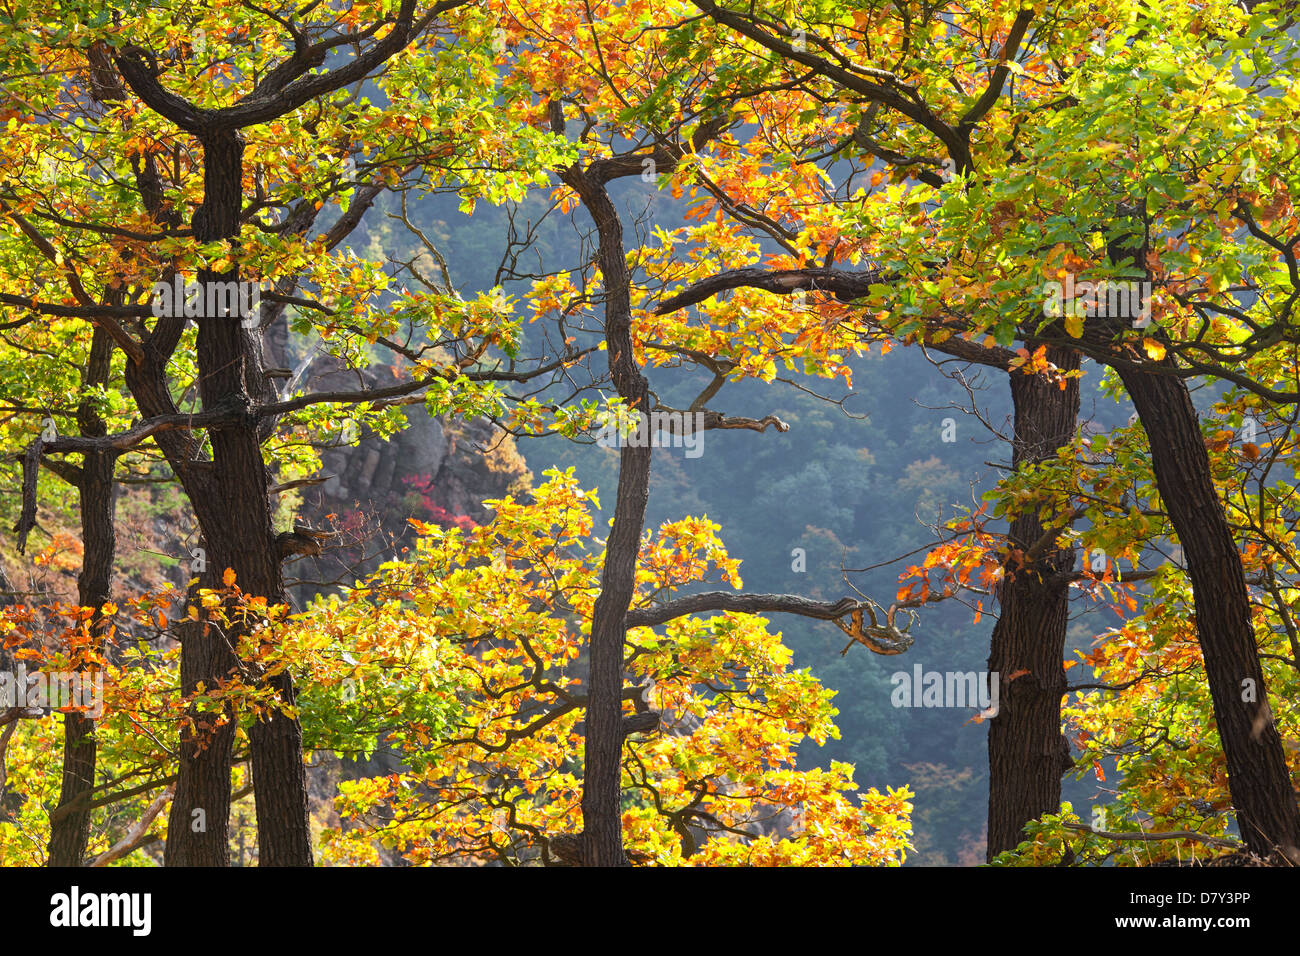 Sessile oak / Cornish oak / Durmast oak (Quercus petraea / Quercus sessiliflora) in autumn colours Stock Photo